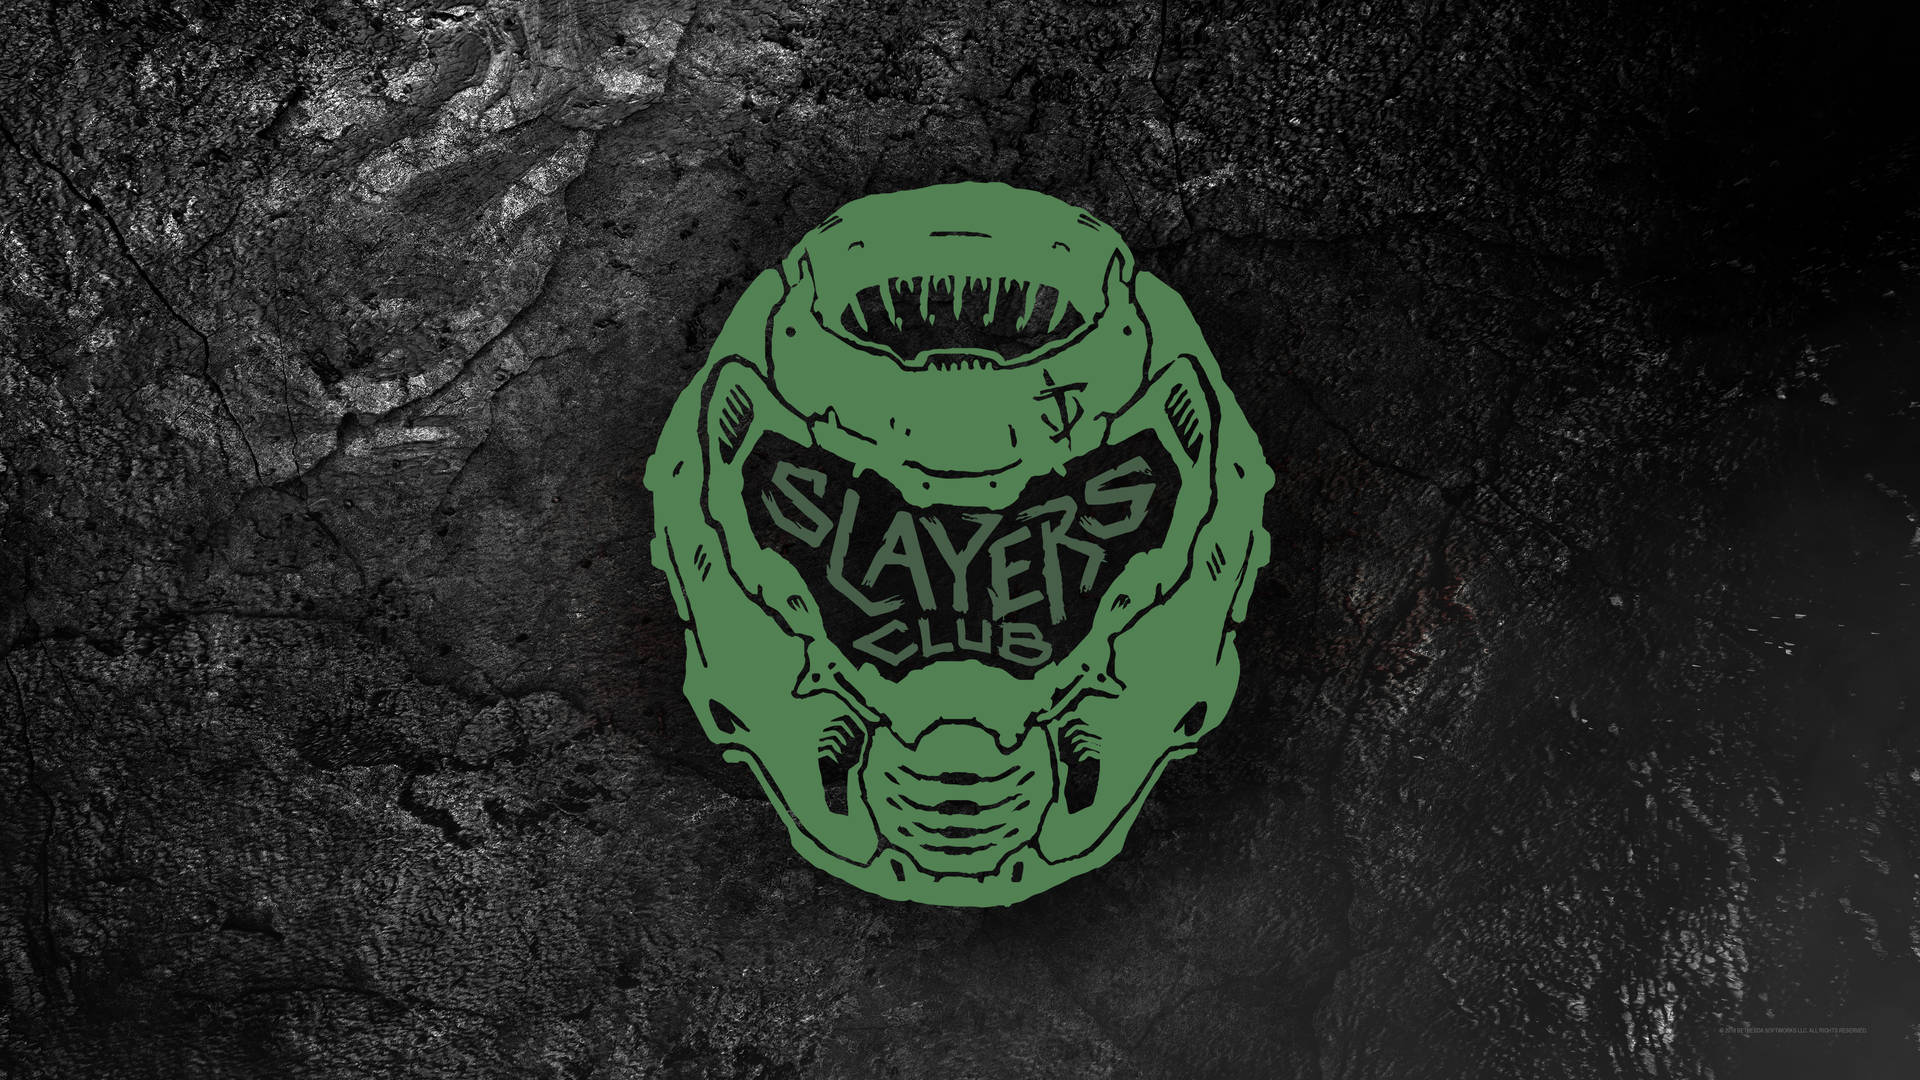 Slayers Club Doom 4k Wallpaper